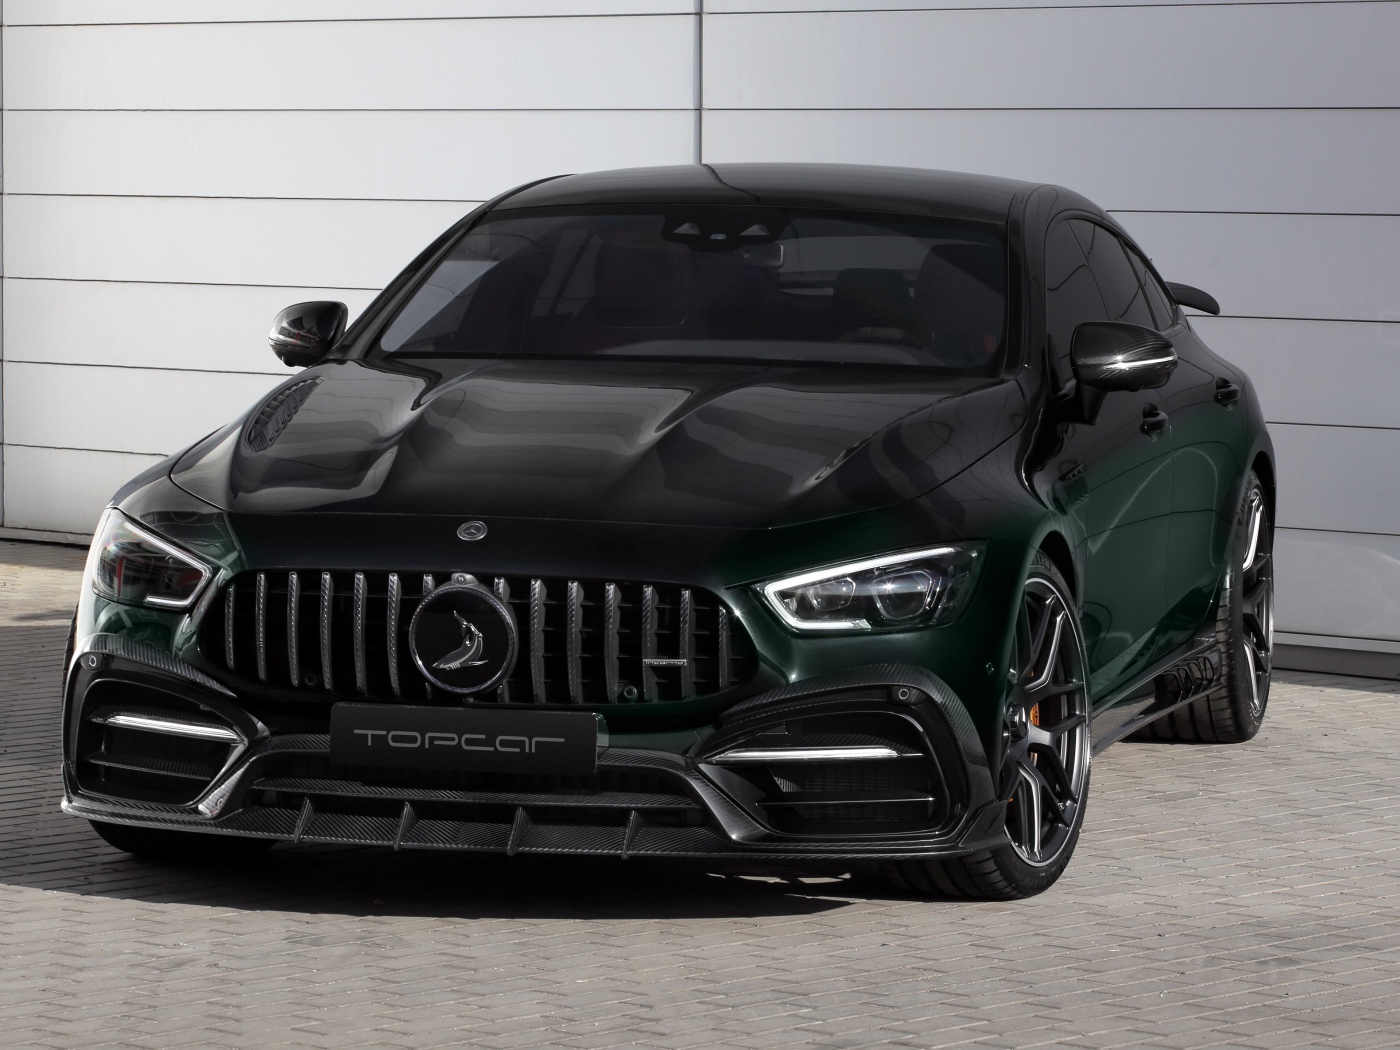 Black car Mercedes-AMG GT 63 S, 2020 at the garage